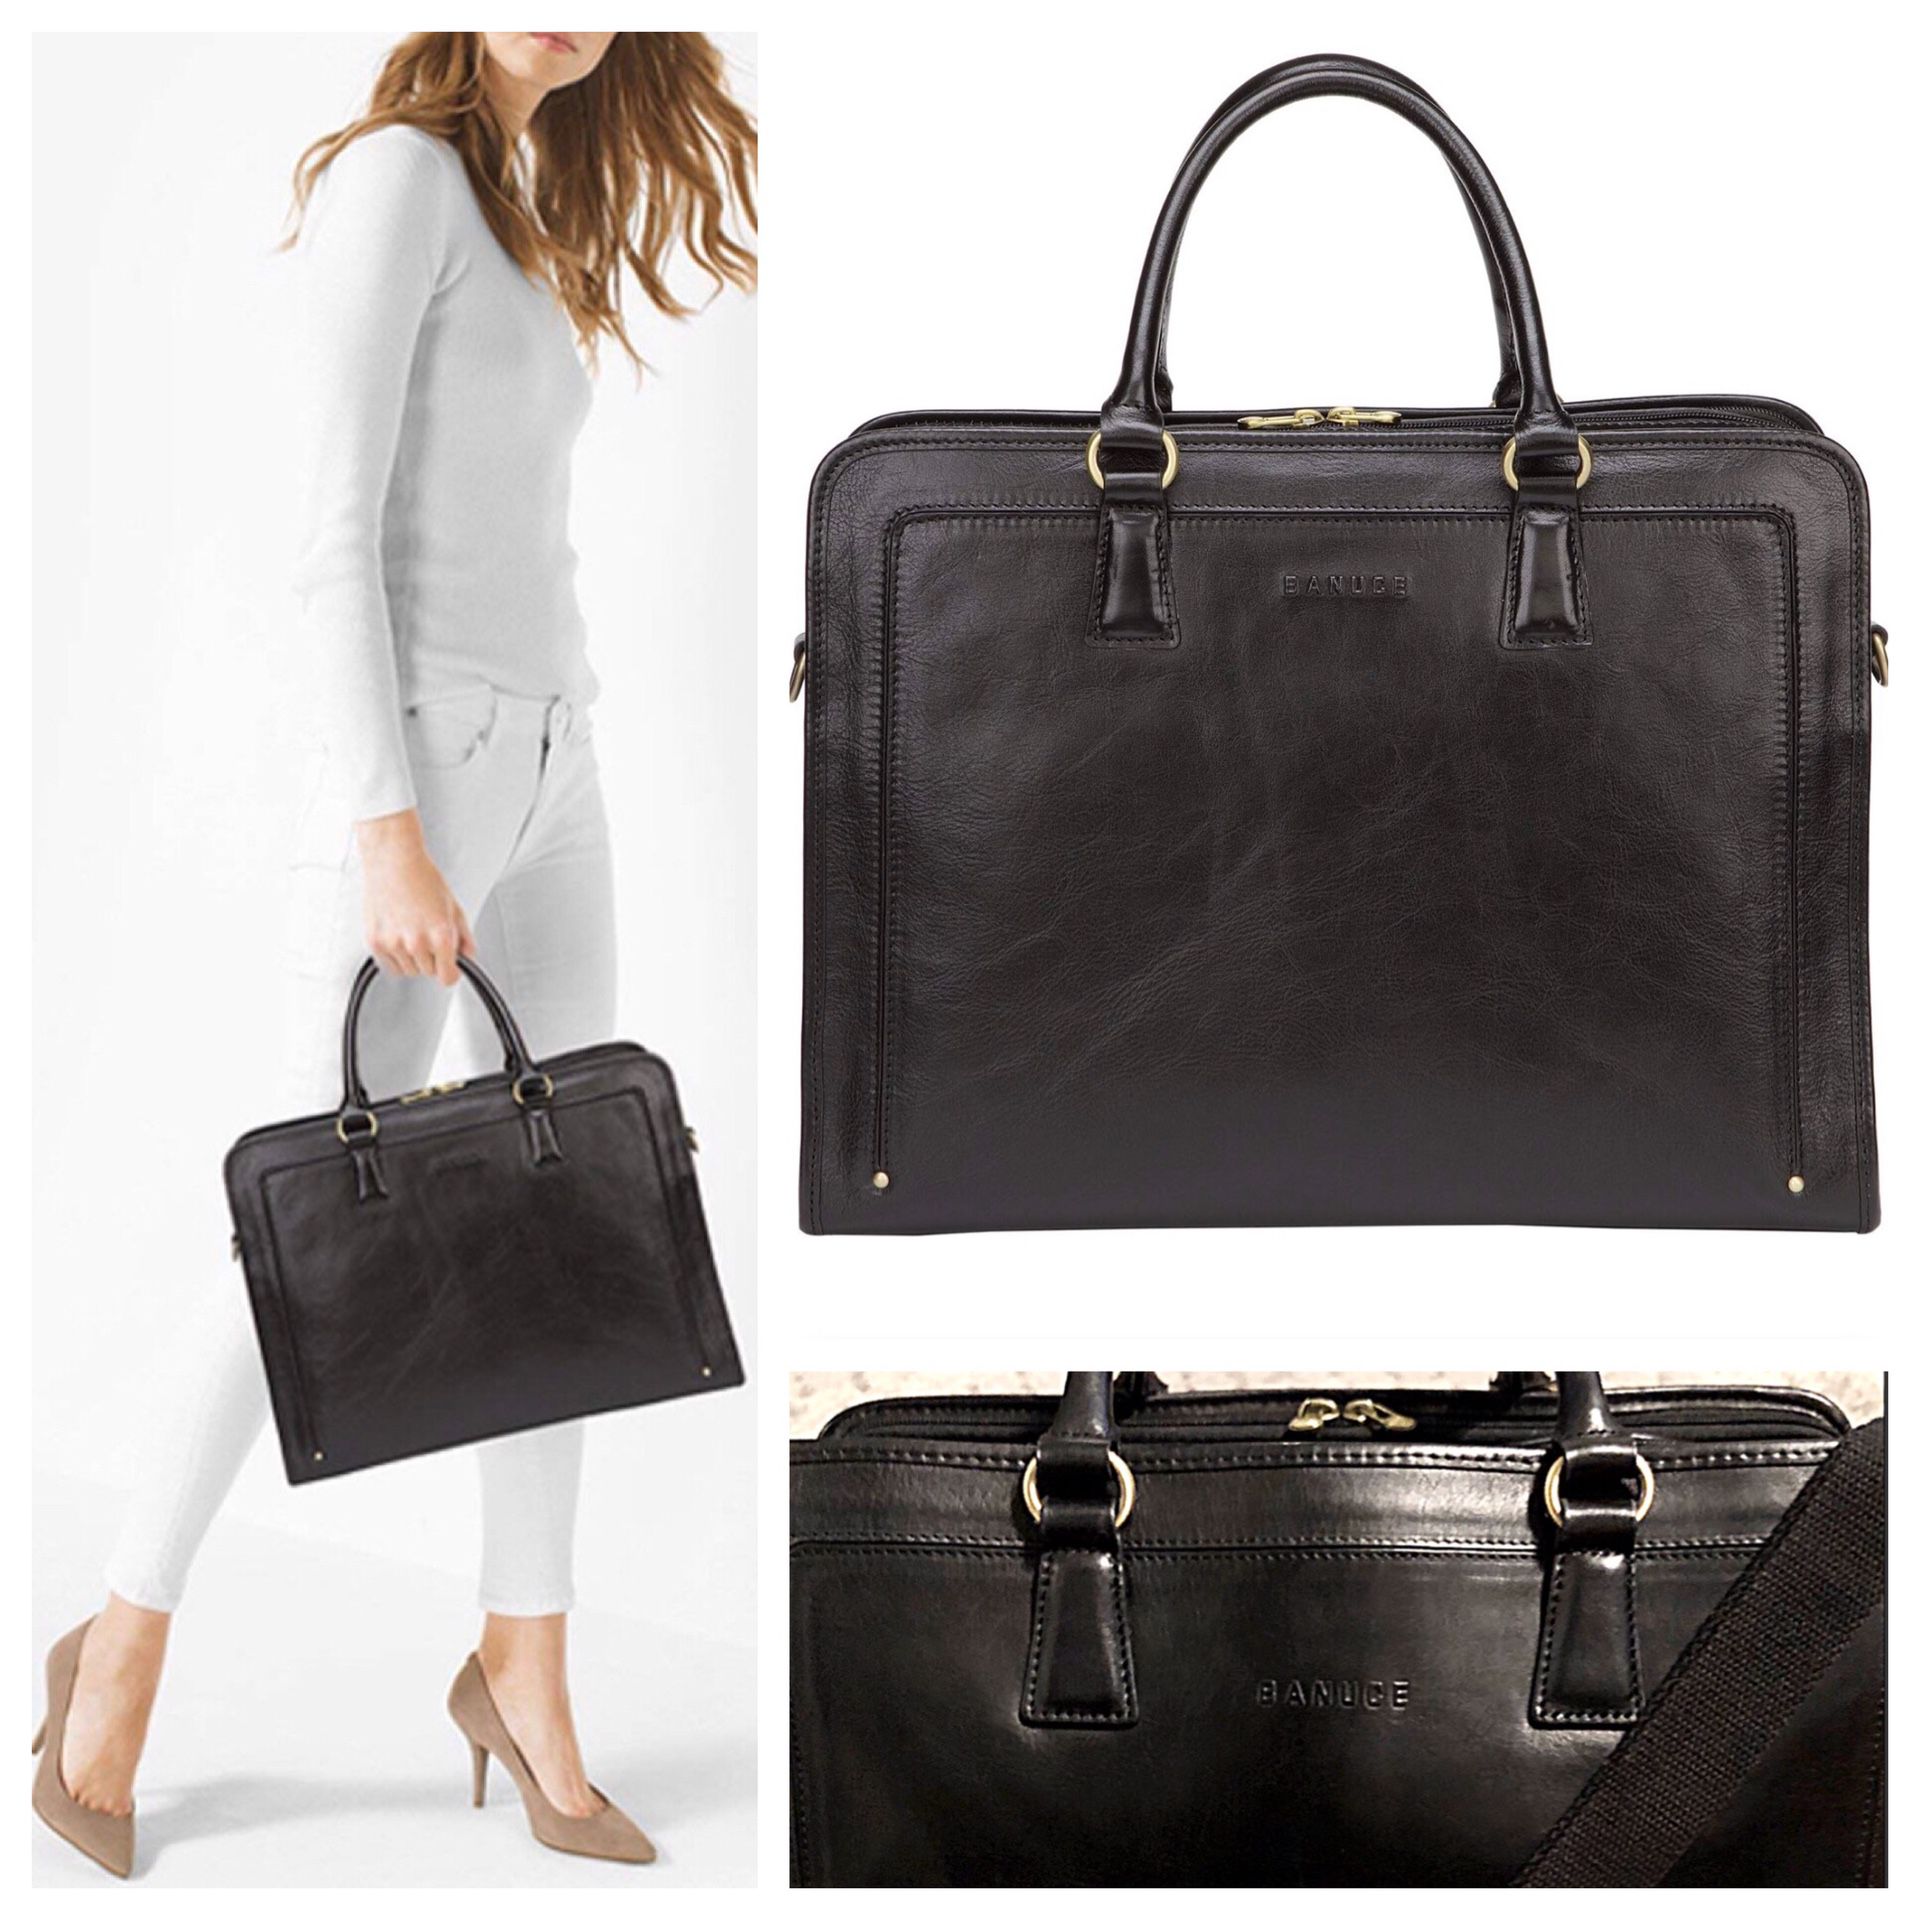 Women’s Banuce briefcase paid $325 laptop bag. Excellent condition! Italian leather handbag, 15in laptop/Messenger Satchel bag purse. Currently sold